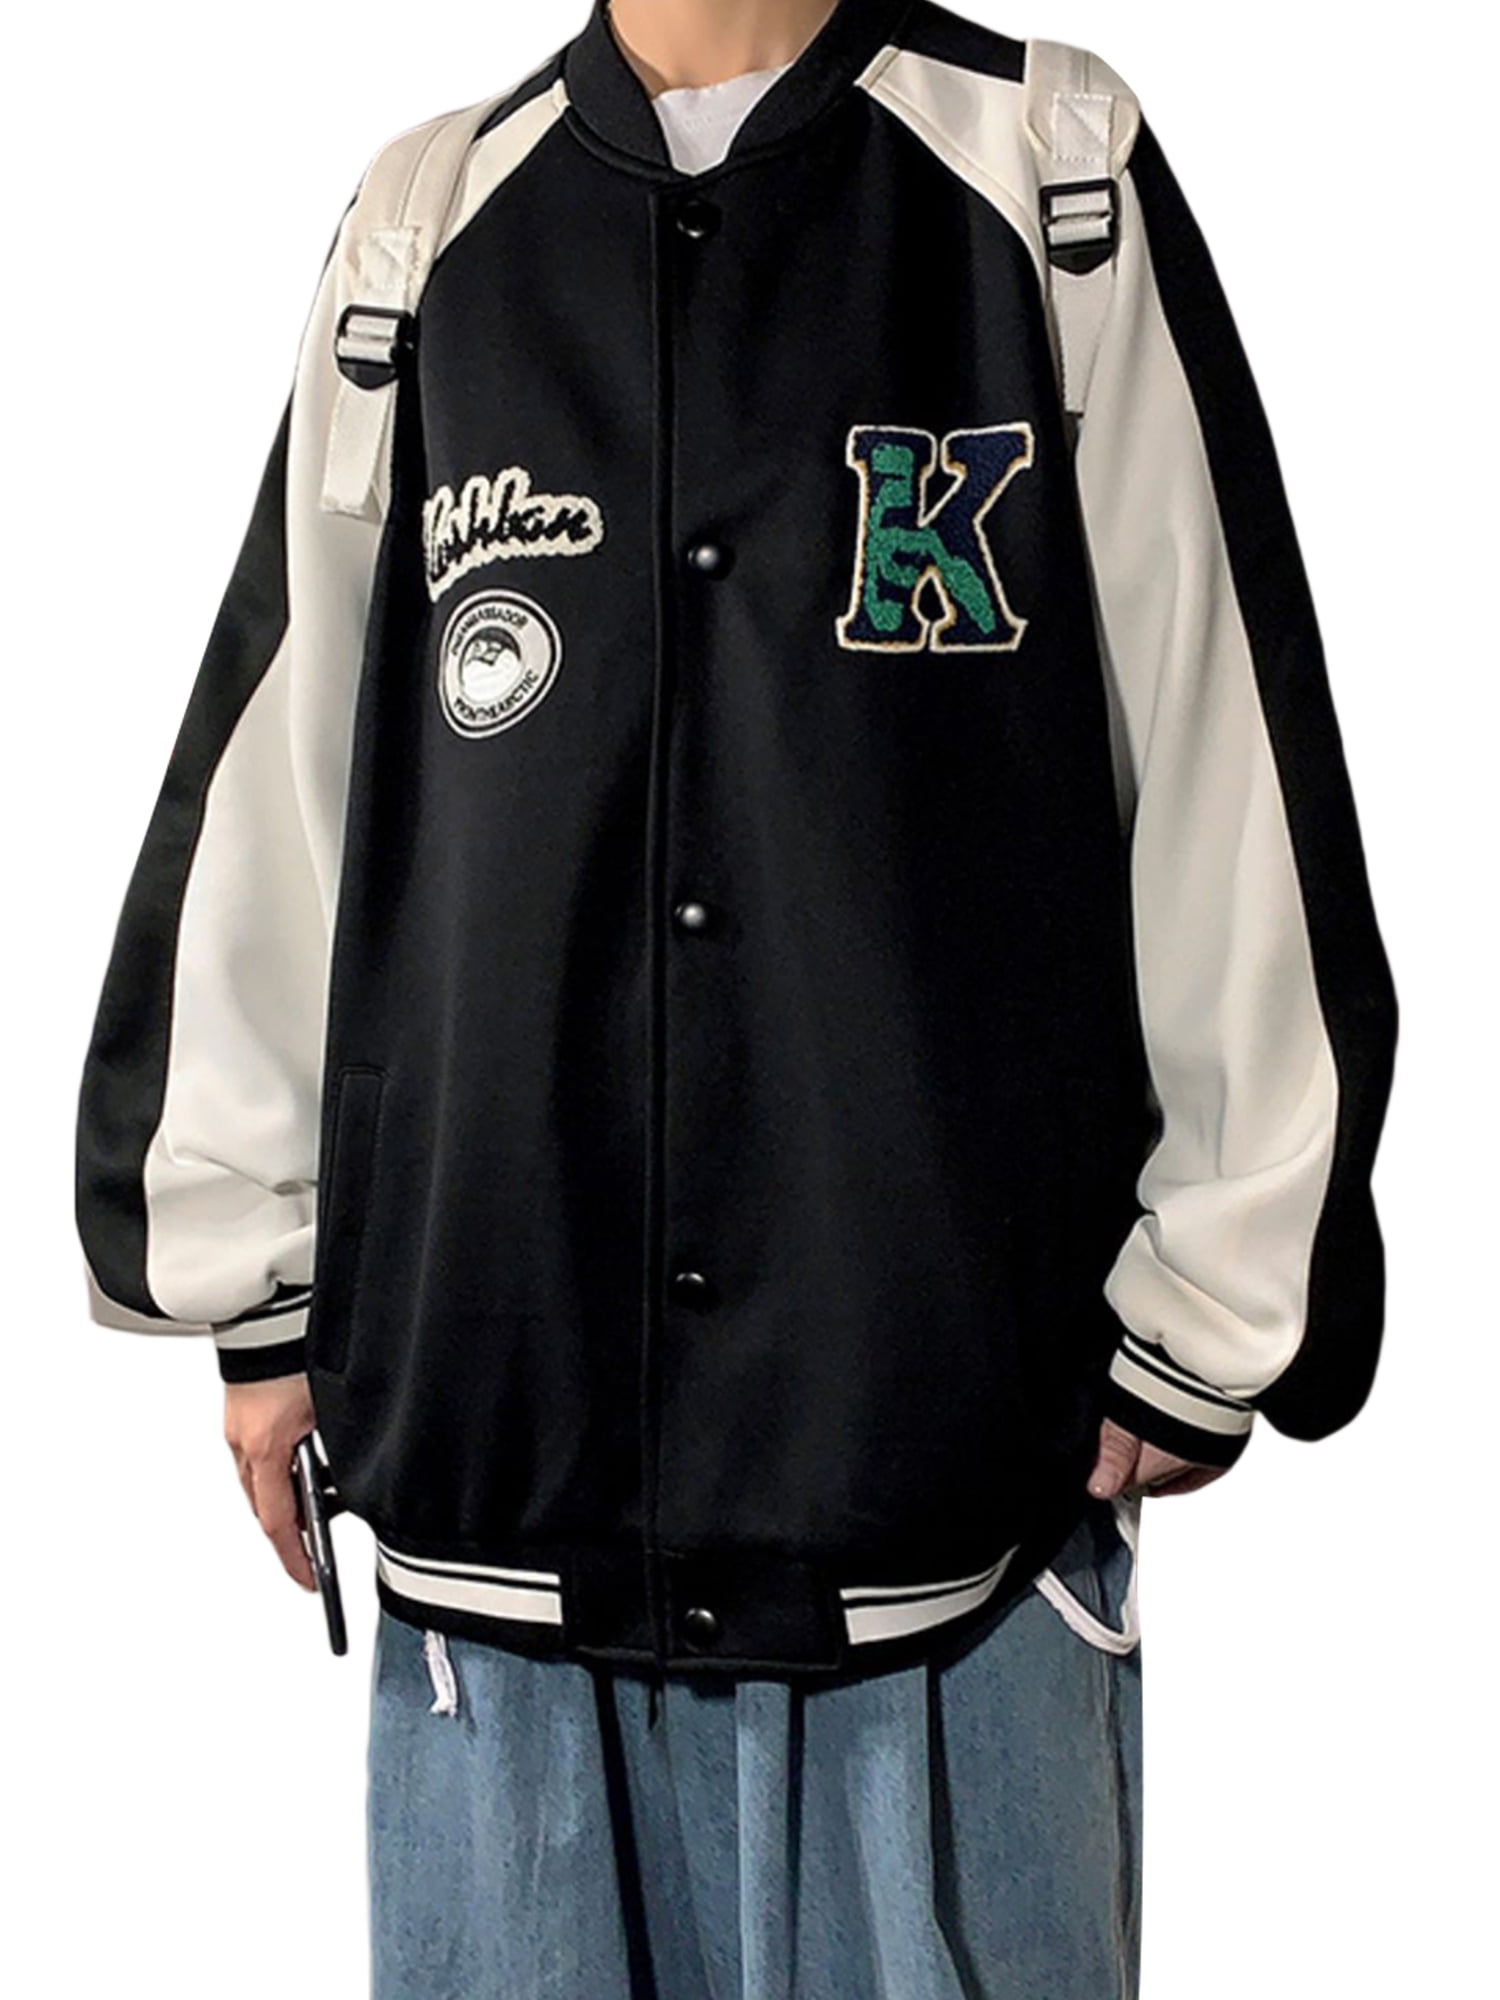 Ace Family Galaxy Logo Teen Boys Girls Youth Teenage Sport Baseball Uniform Jacket Coat Sweater Coat